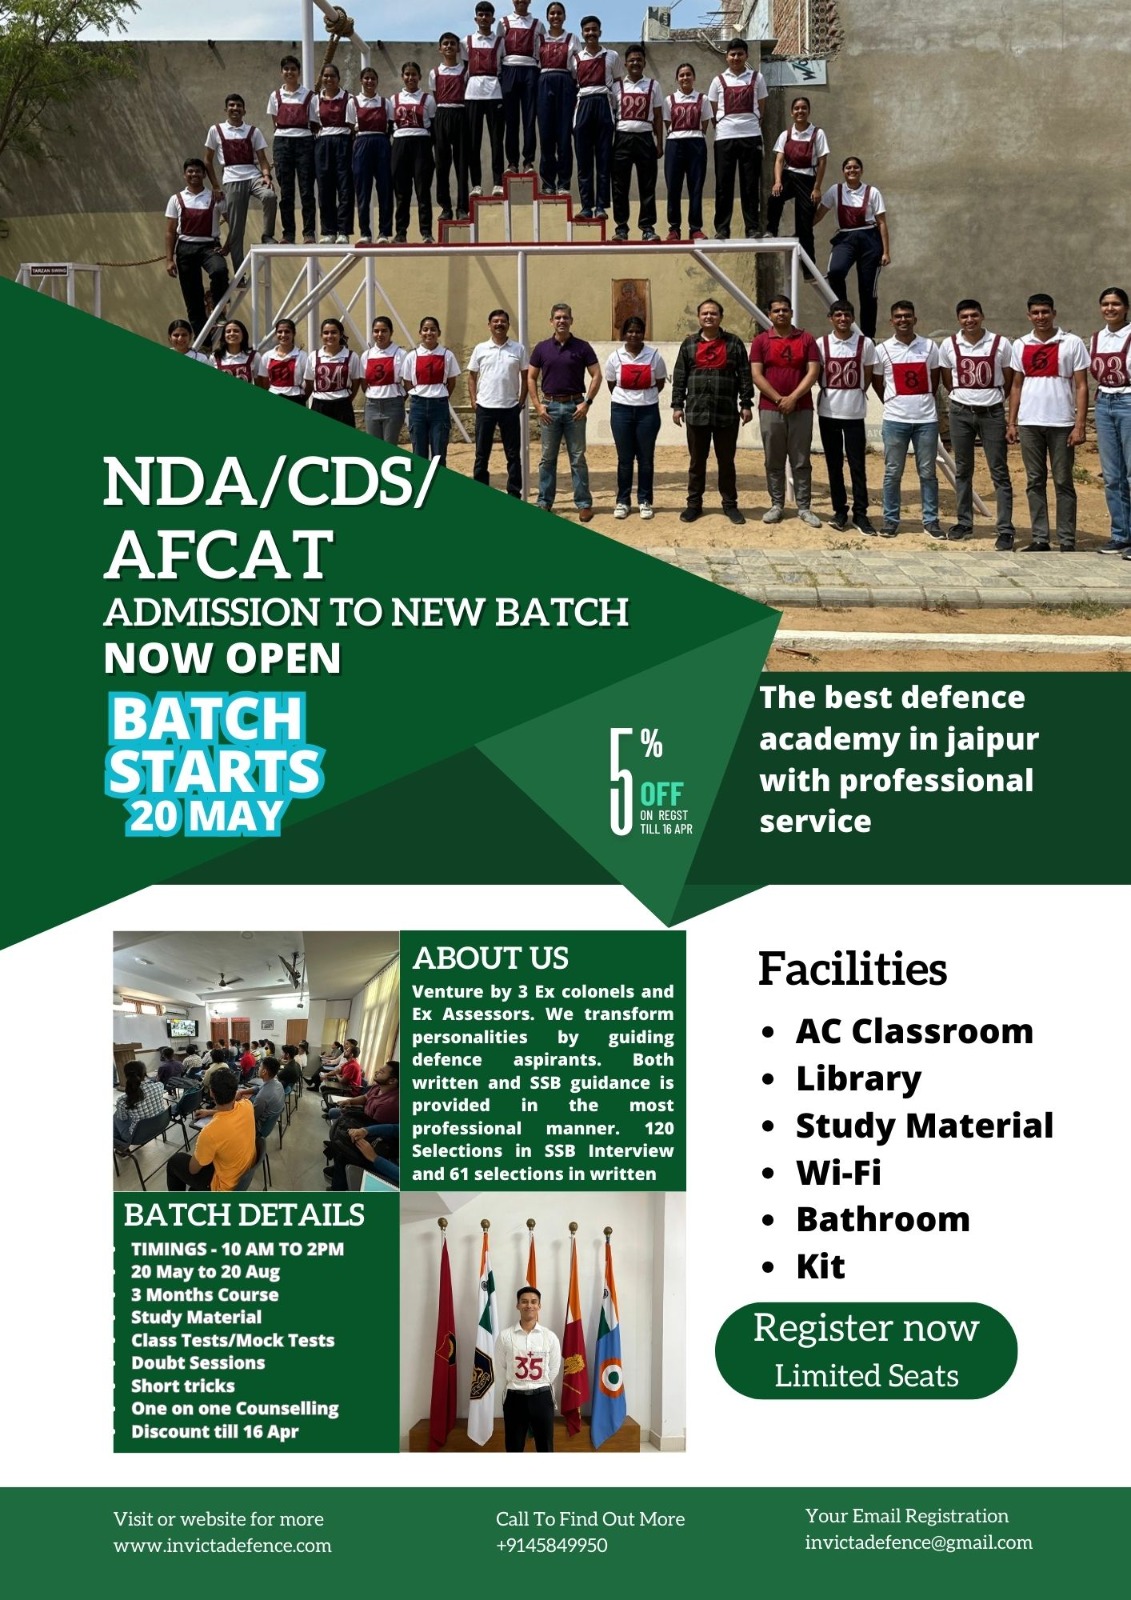 Invicta Defence Academy | New Batch